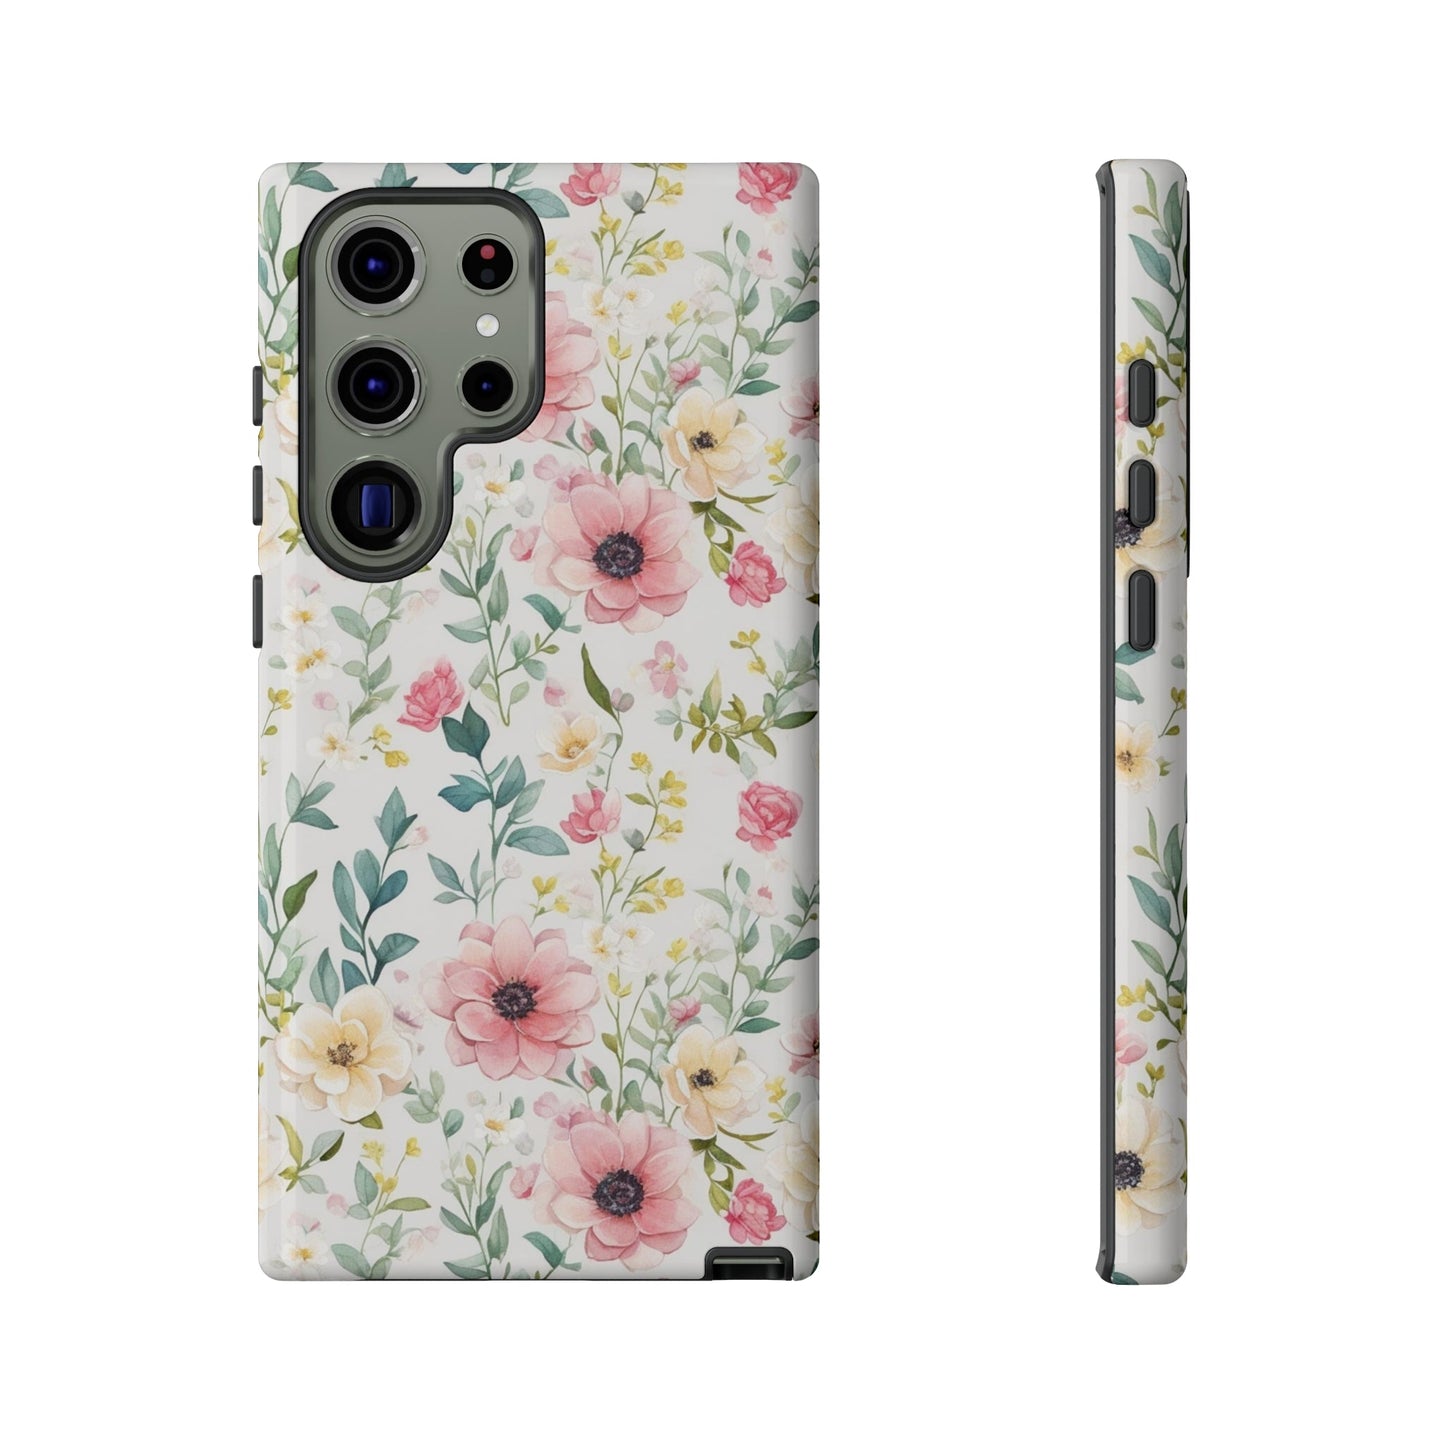 Pastel Floral Phone case fits iPhone Samsung Galaxy Google Pixel - Cheerful Lane